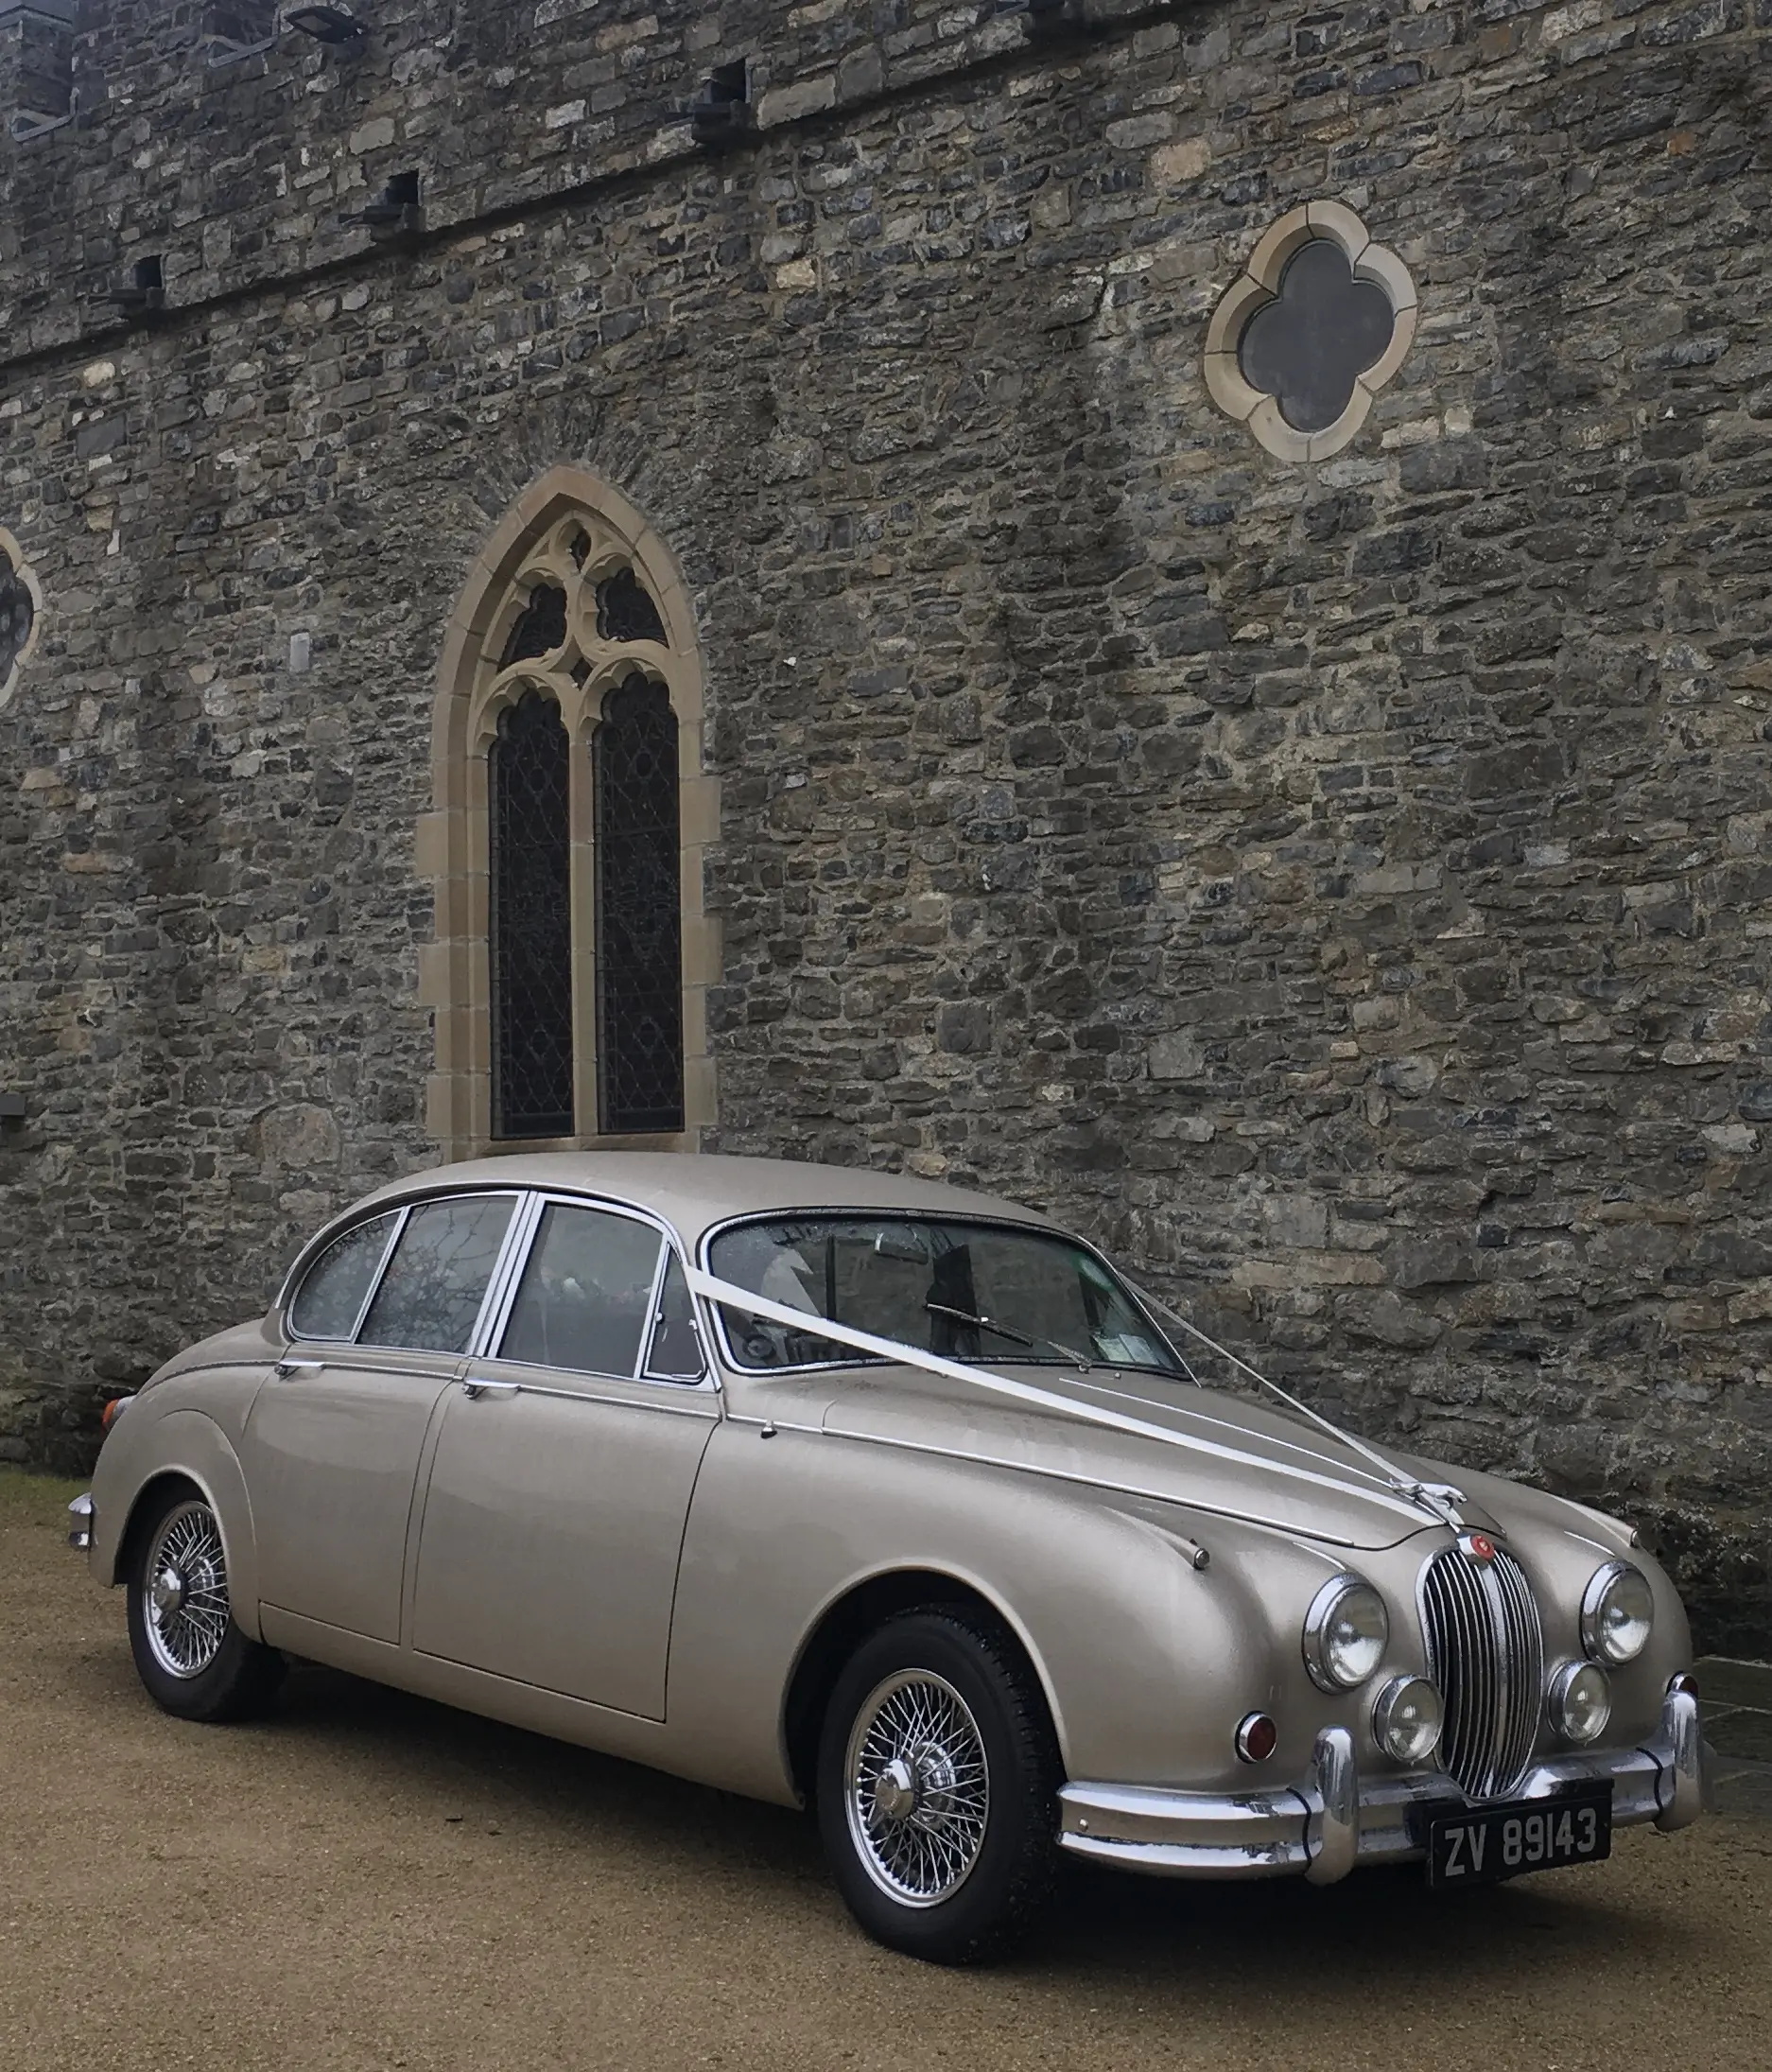 One of our beautiful Jaguar Wedding Cars at Sword’s Castle, Dublin ”width=